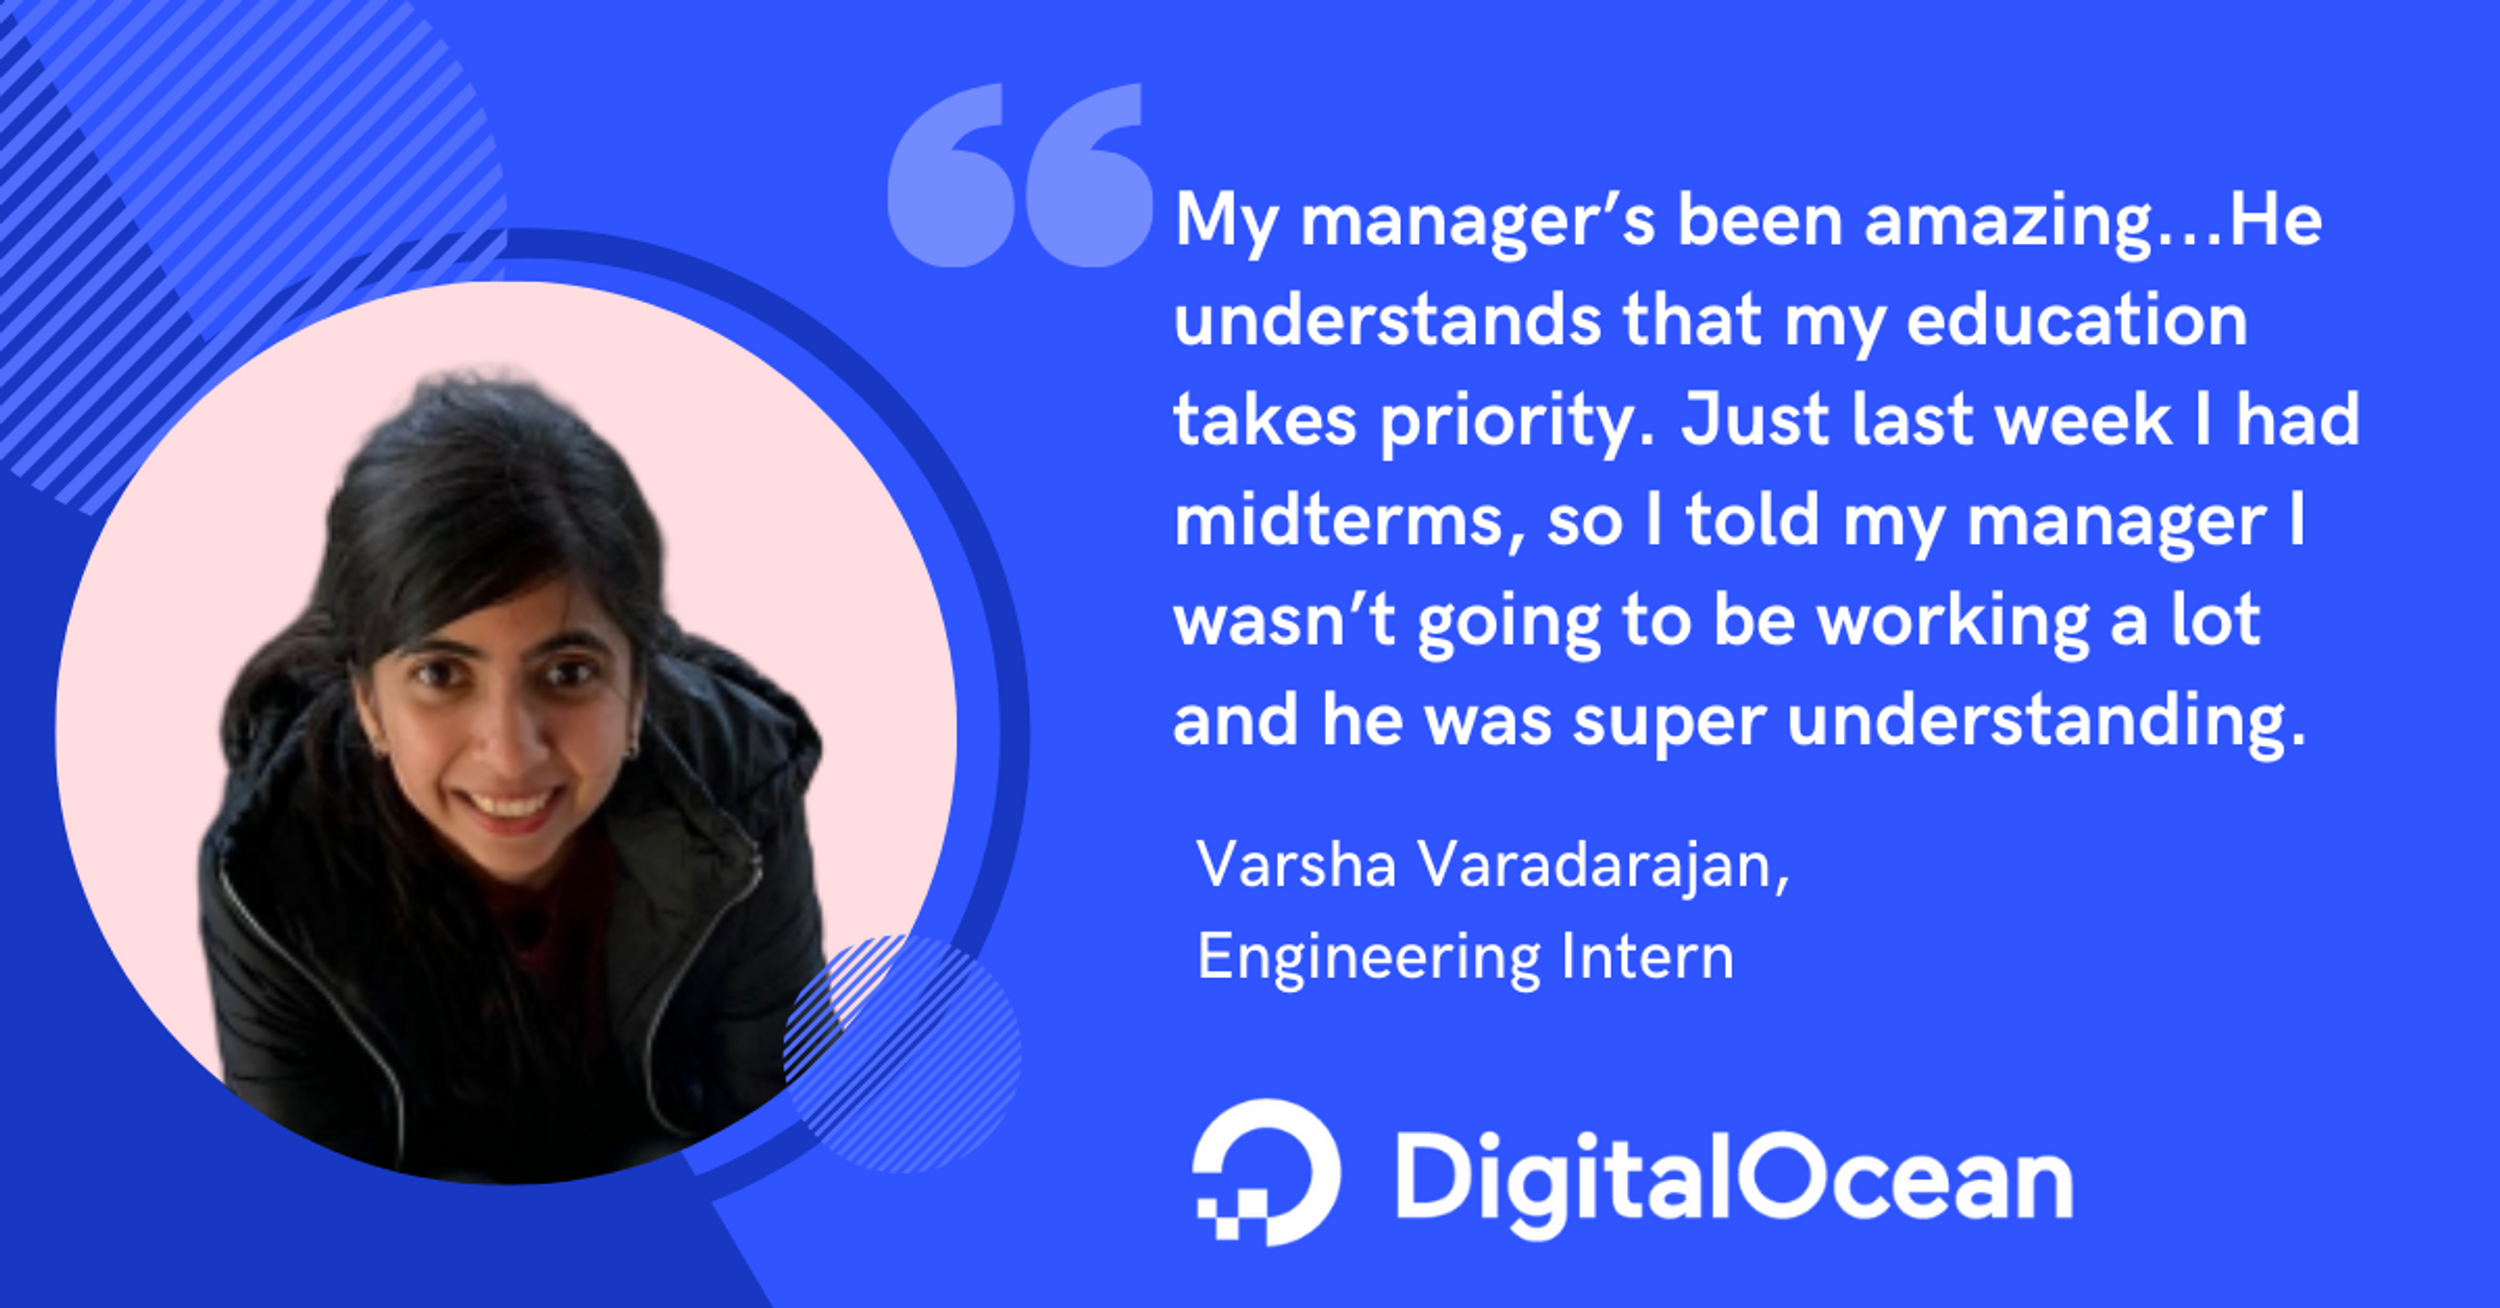 Picture of Varsha Varadarajan of DigitalOcean